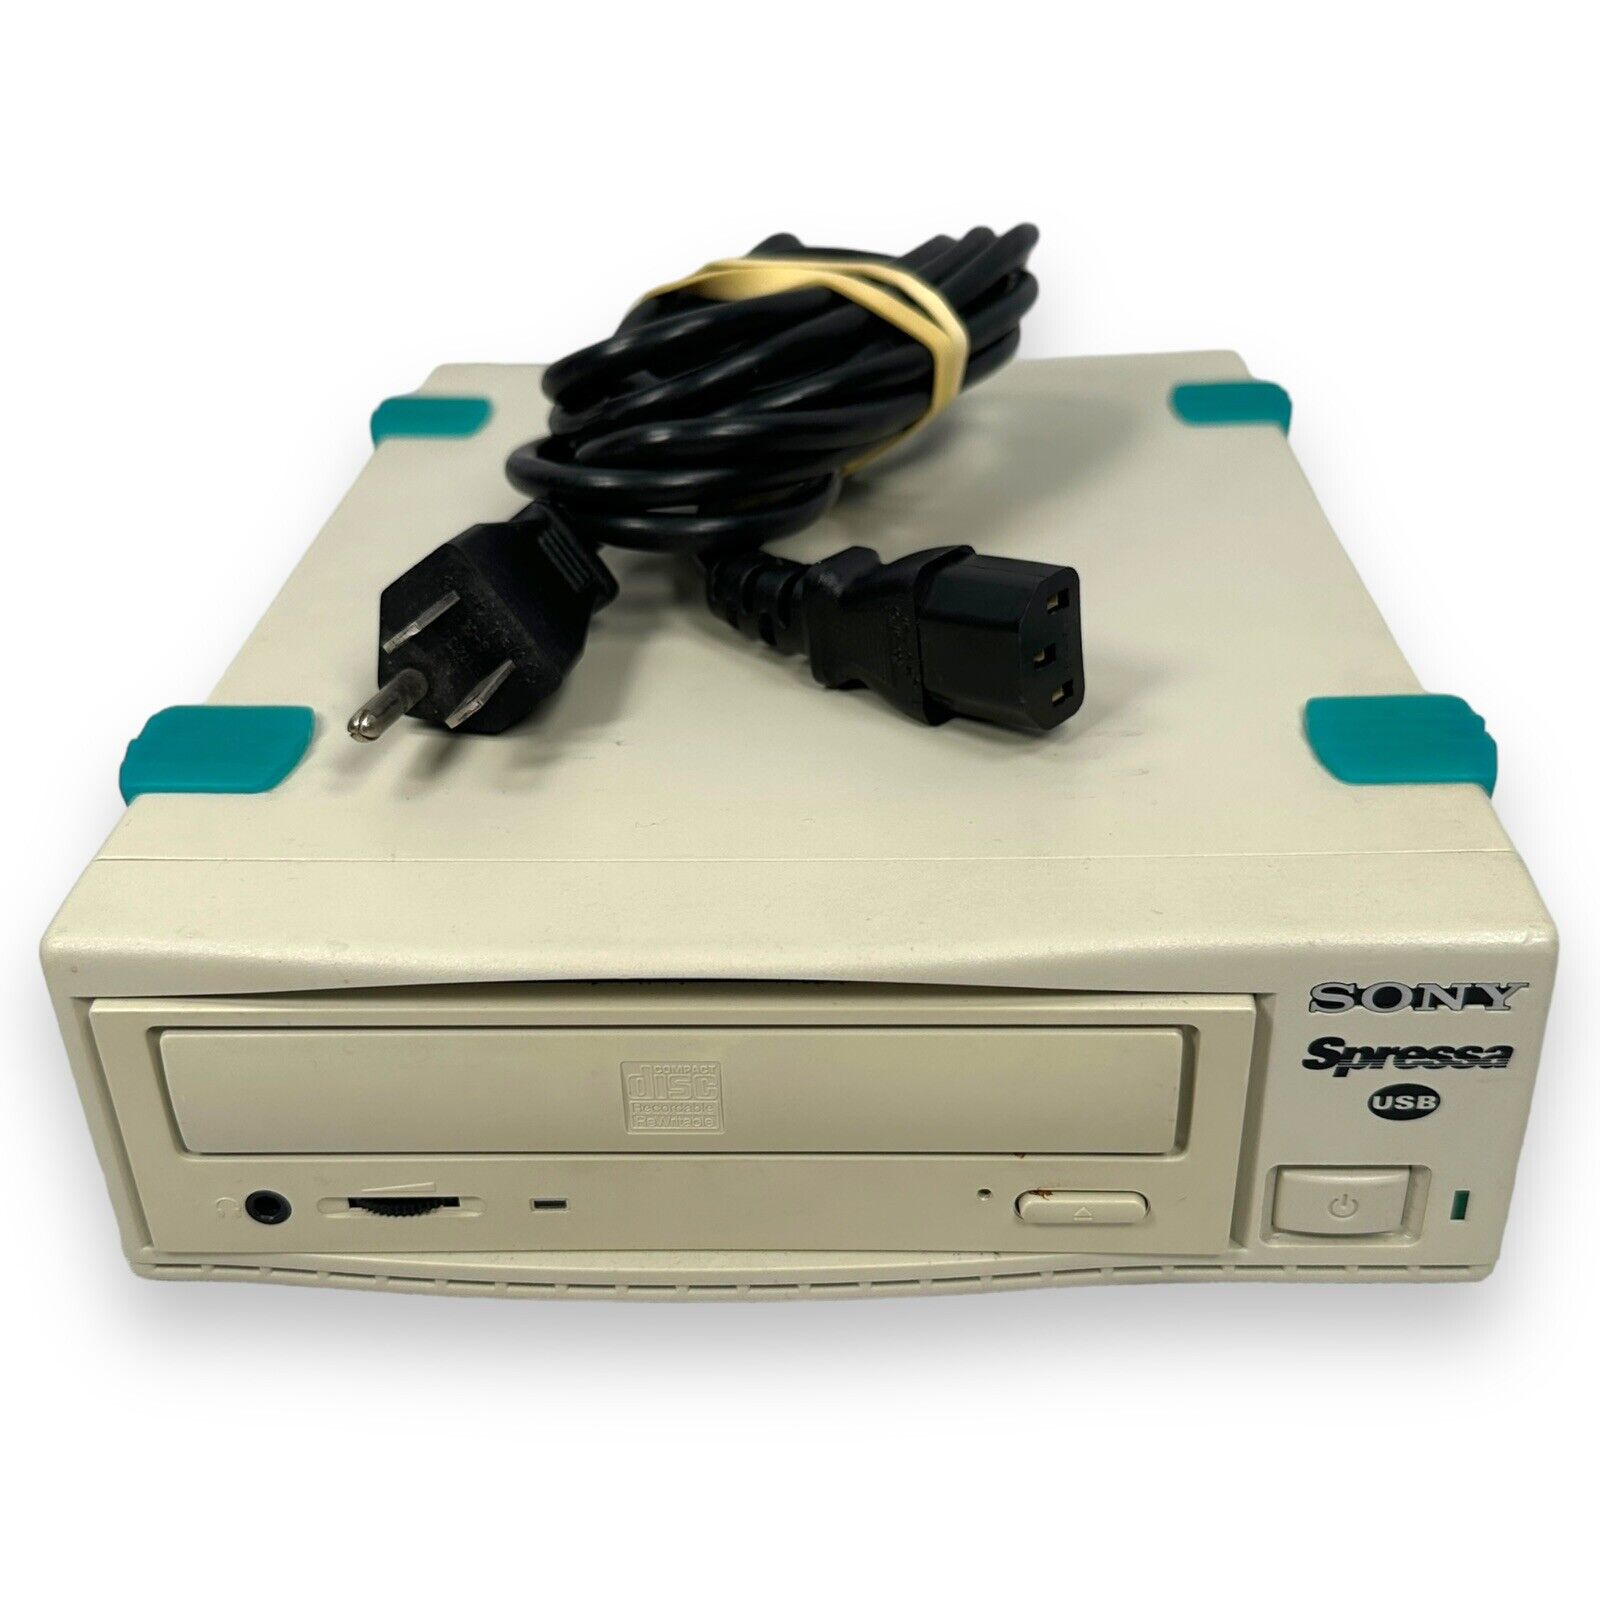 Sony Spressa External USB Computer CD-RW Drive CRX100E/X2 w/ Power Cable